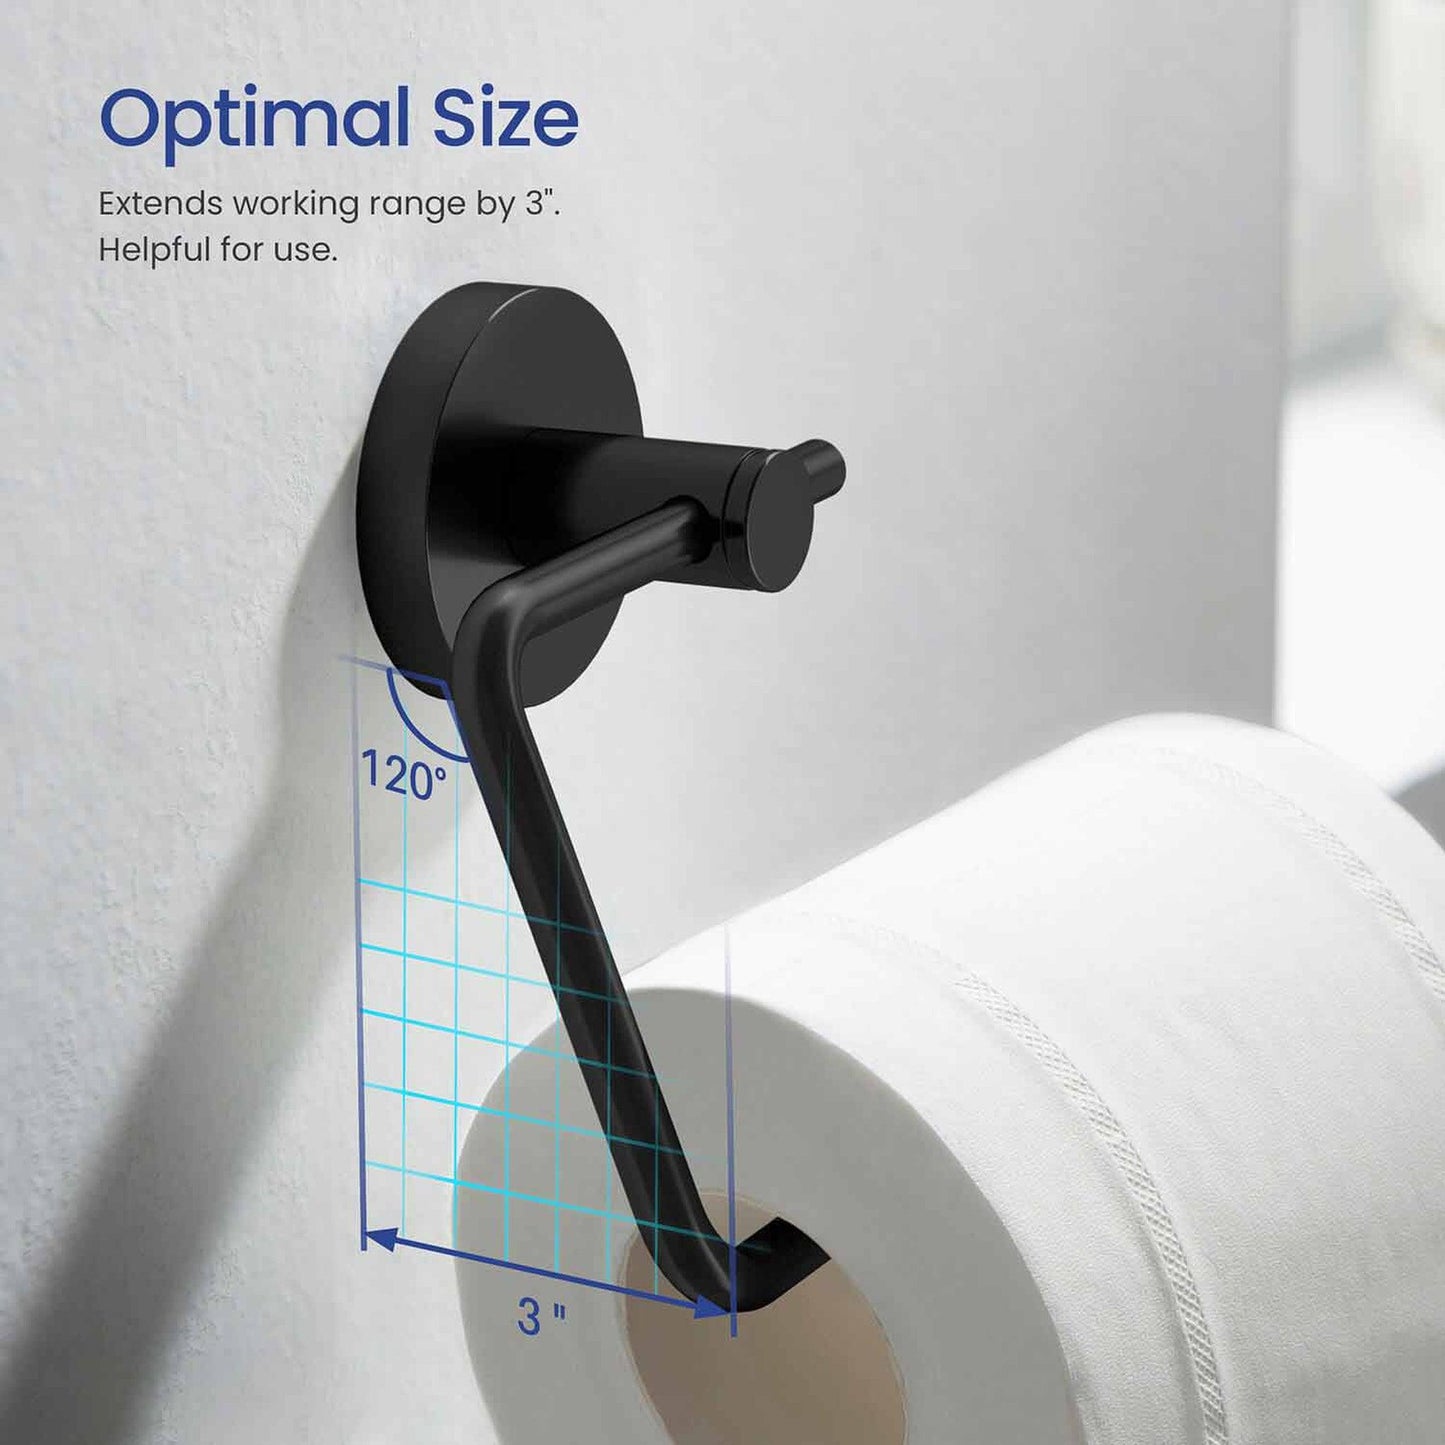 KIBI Circular Brass Bathroom Toilet Paper Holder in Matte Black Finish